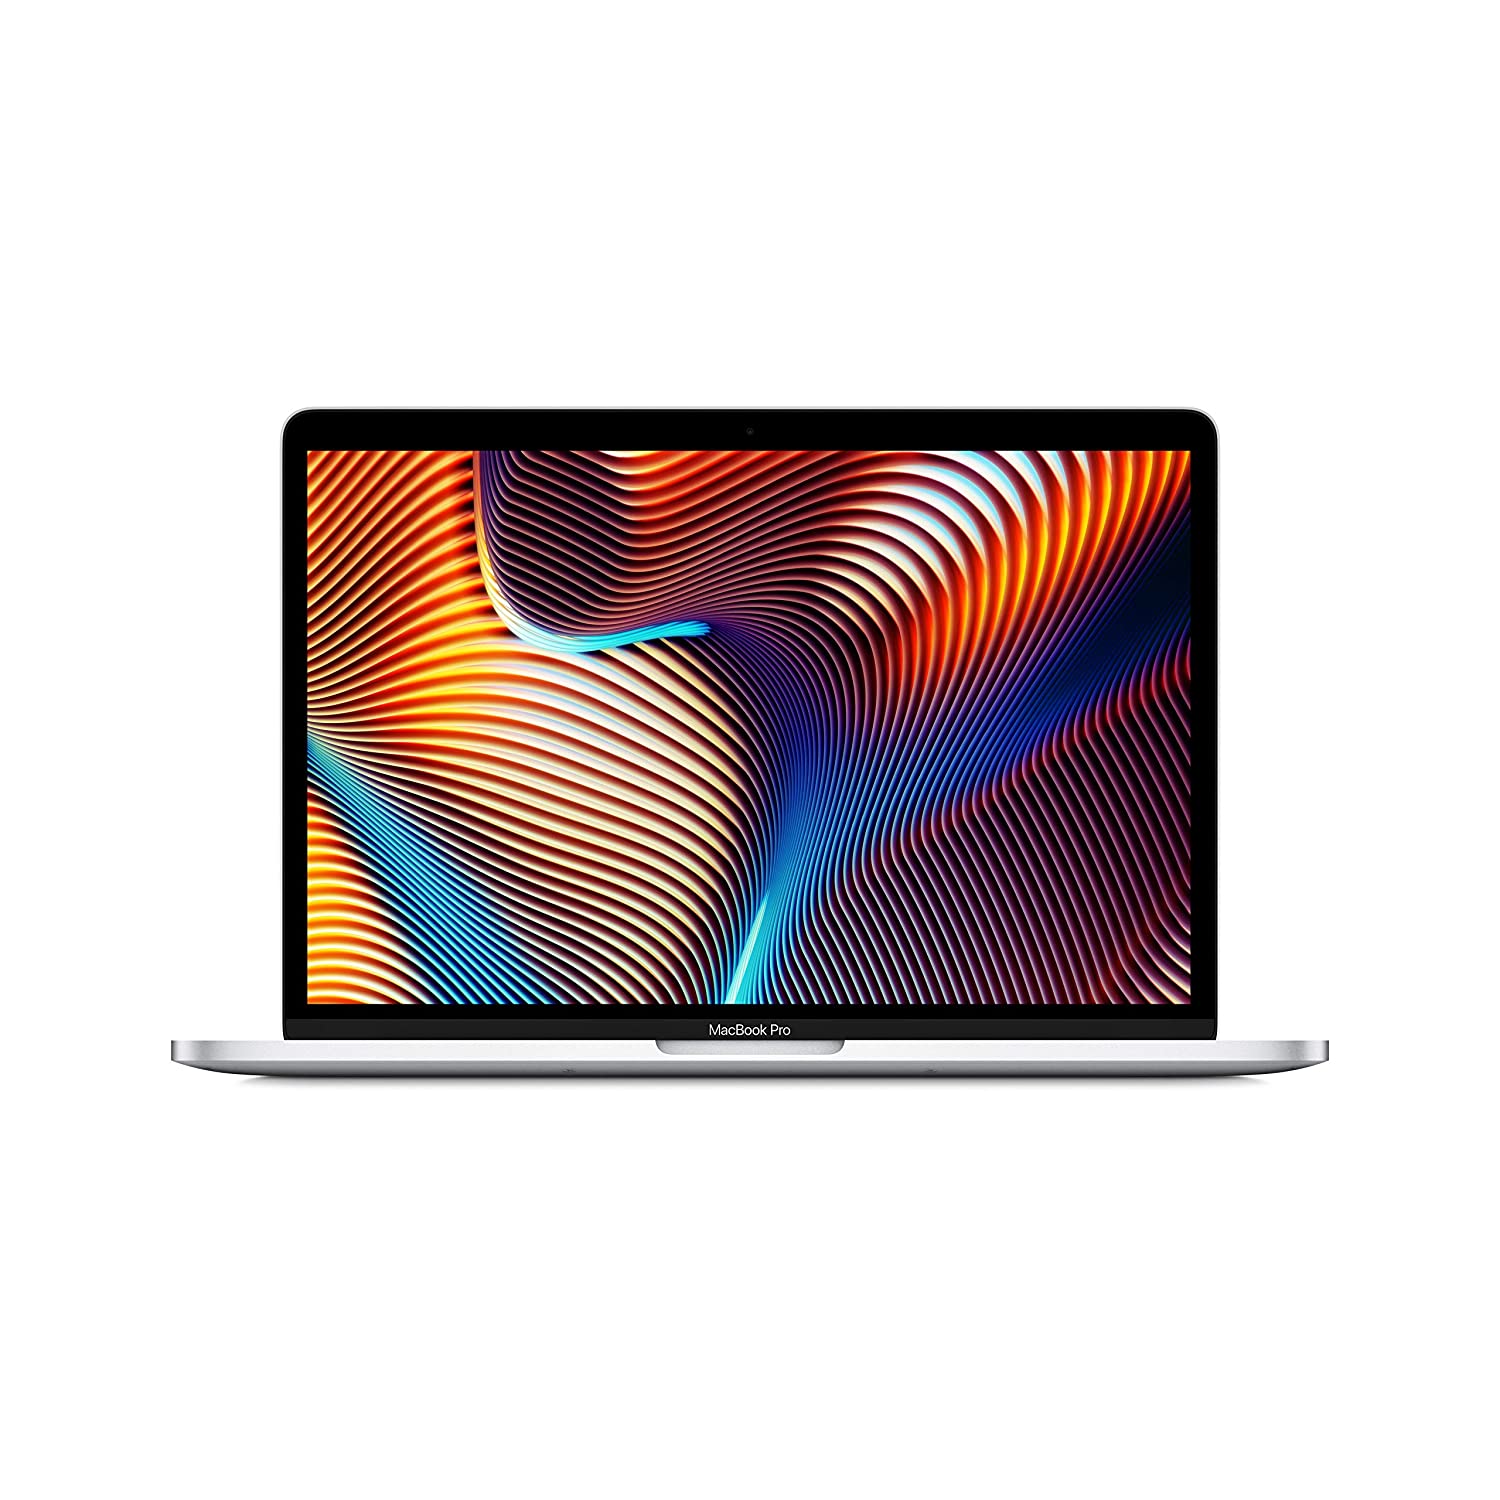 MacBook Pro 8 gb 13 inch